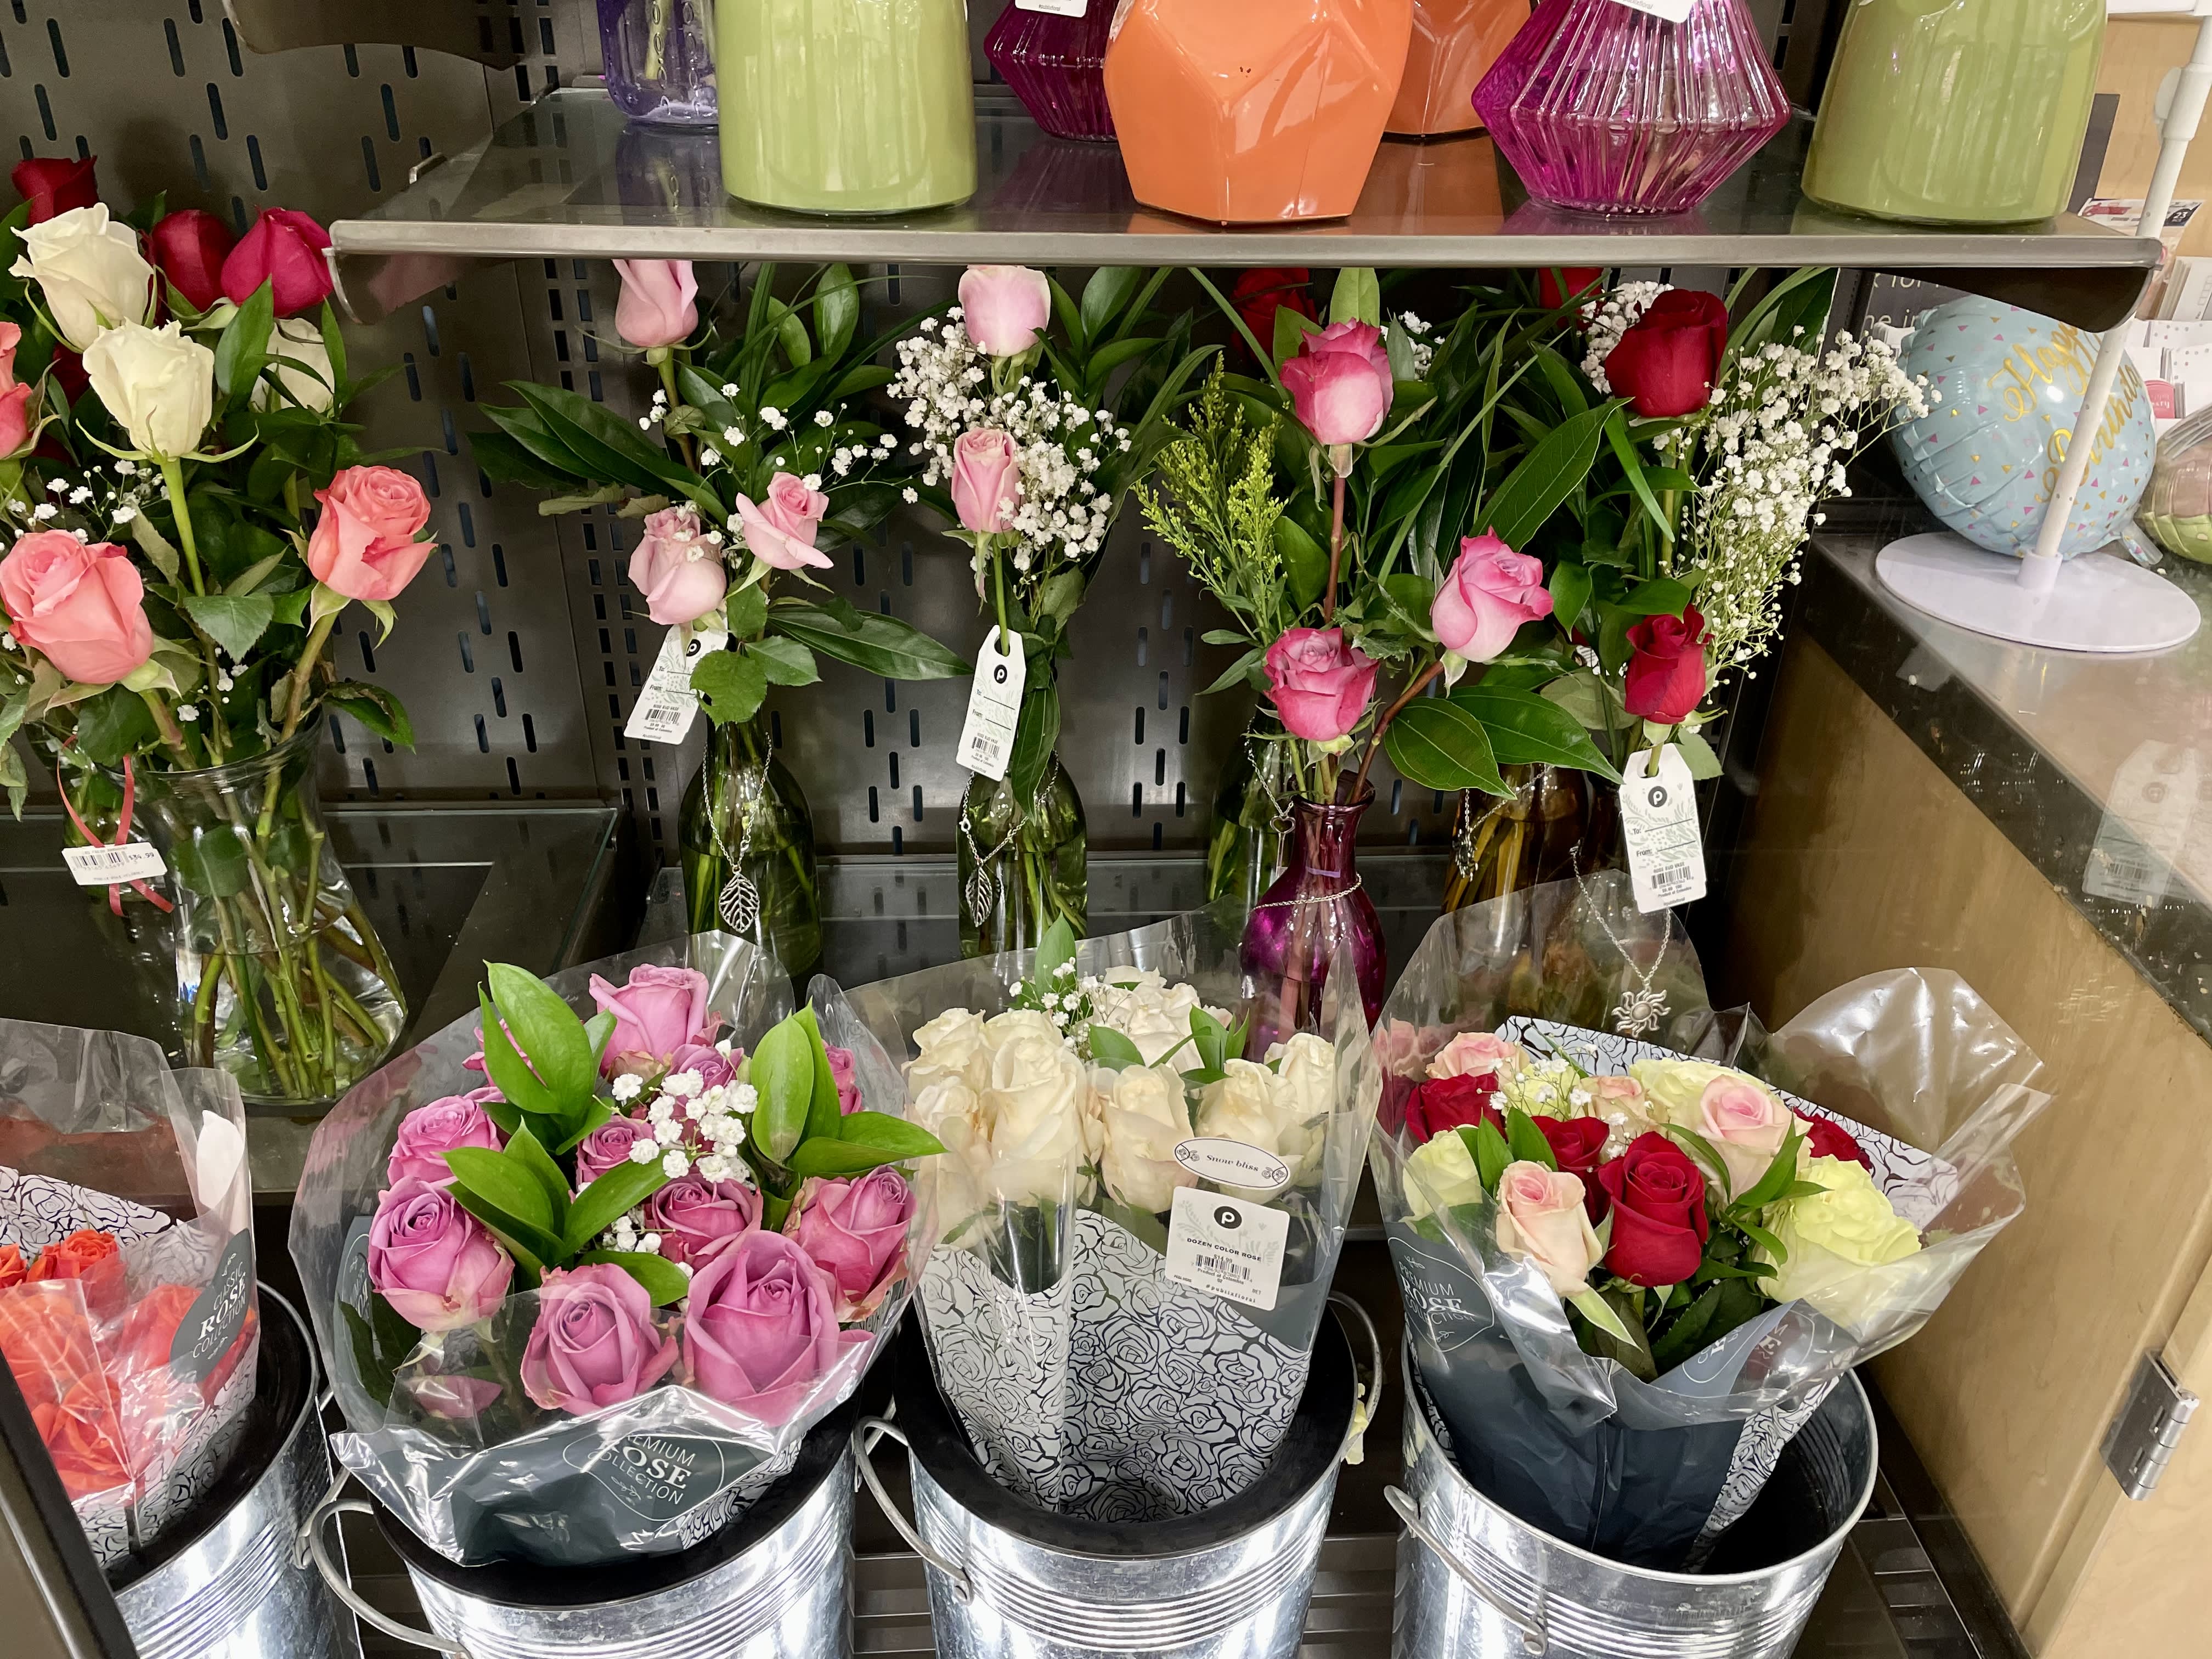 Winter White Farmhouse Style grocery store flower arrangement